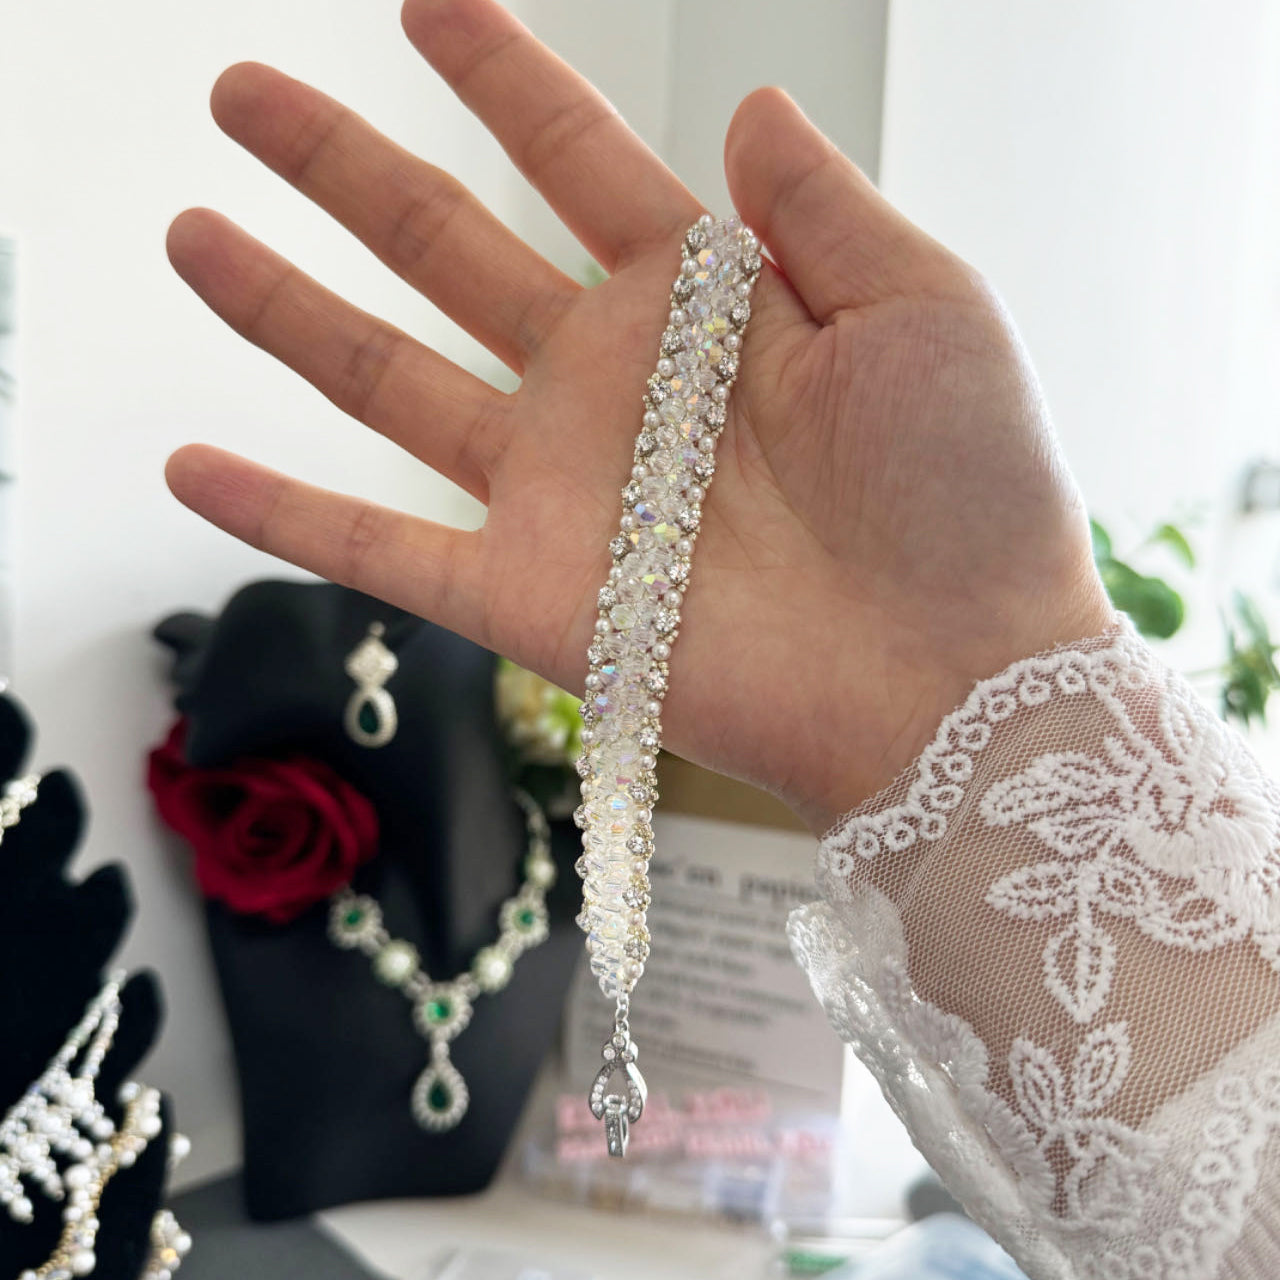 Kit - Sparkling Pearl Bracelet